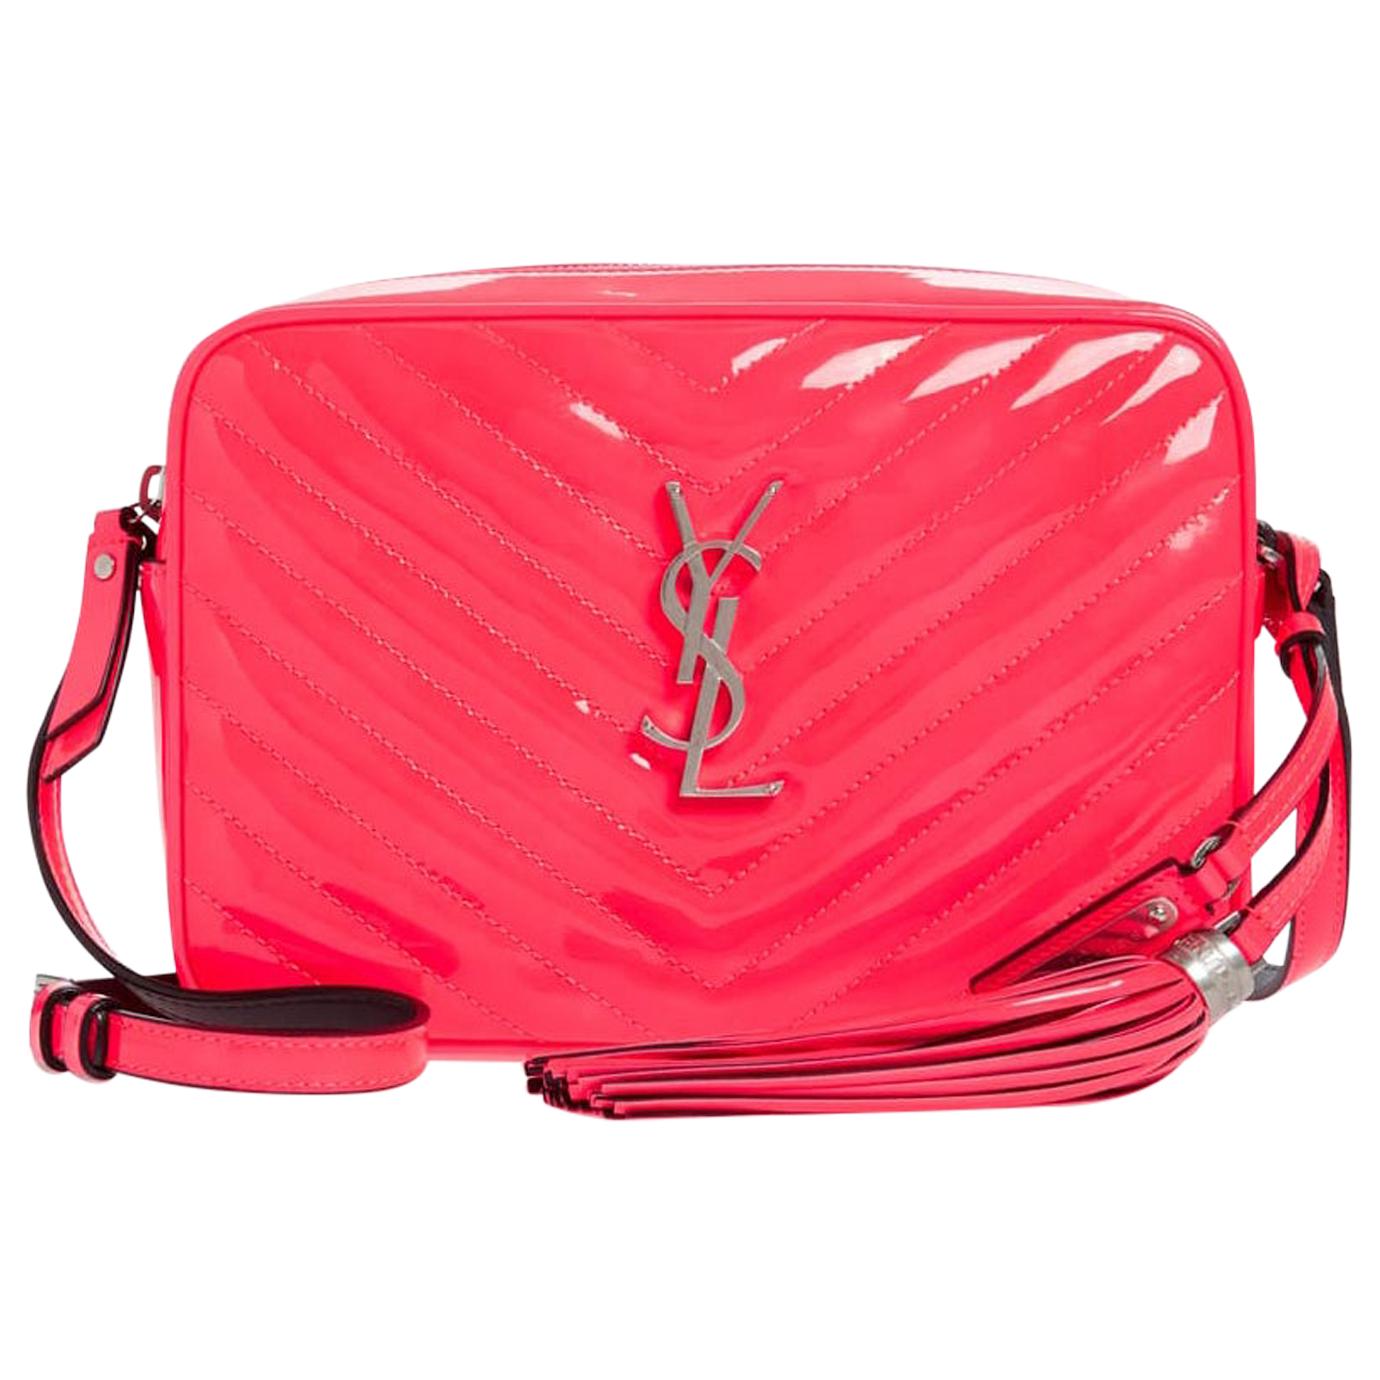 Lou Camera Leather Crossbody Bag in Pink - Saint Laurent